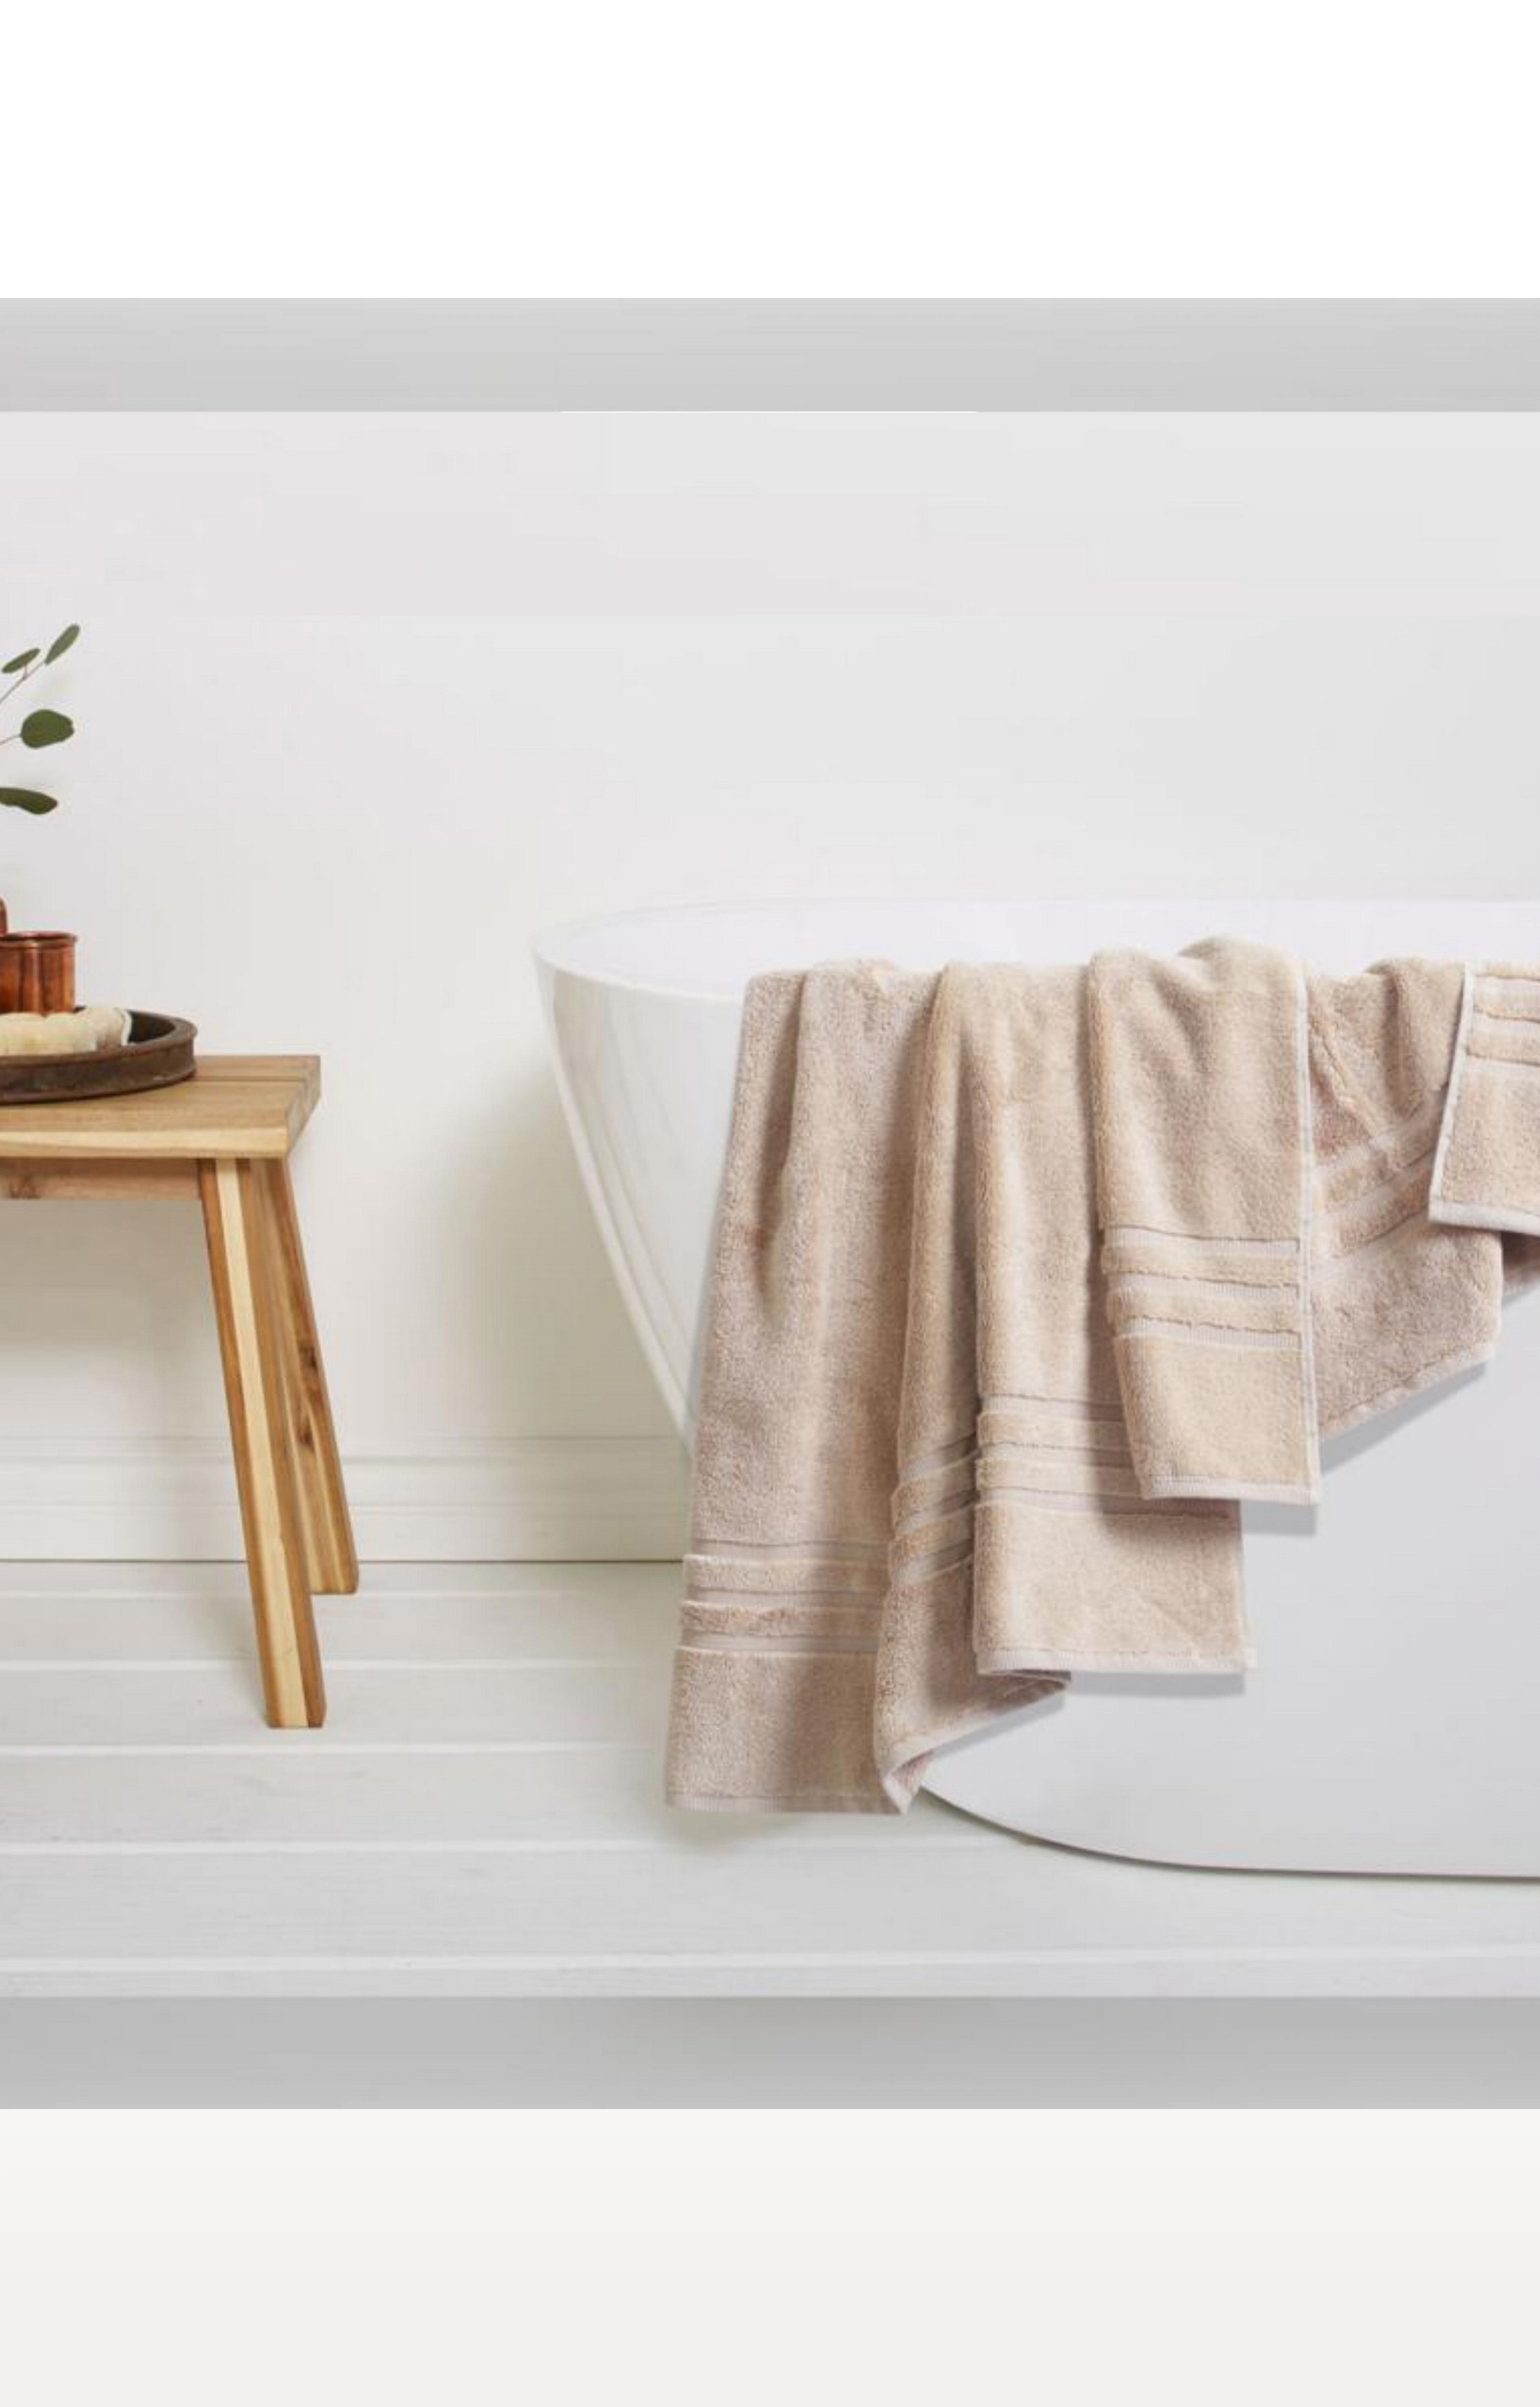 Sita Fabrics | Sita Fabrics Premium Cotton Super Soft Zero Twist Yarn Very Airy 600 GSM Bath Towel - Beige - (24x48 Inch)